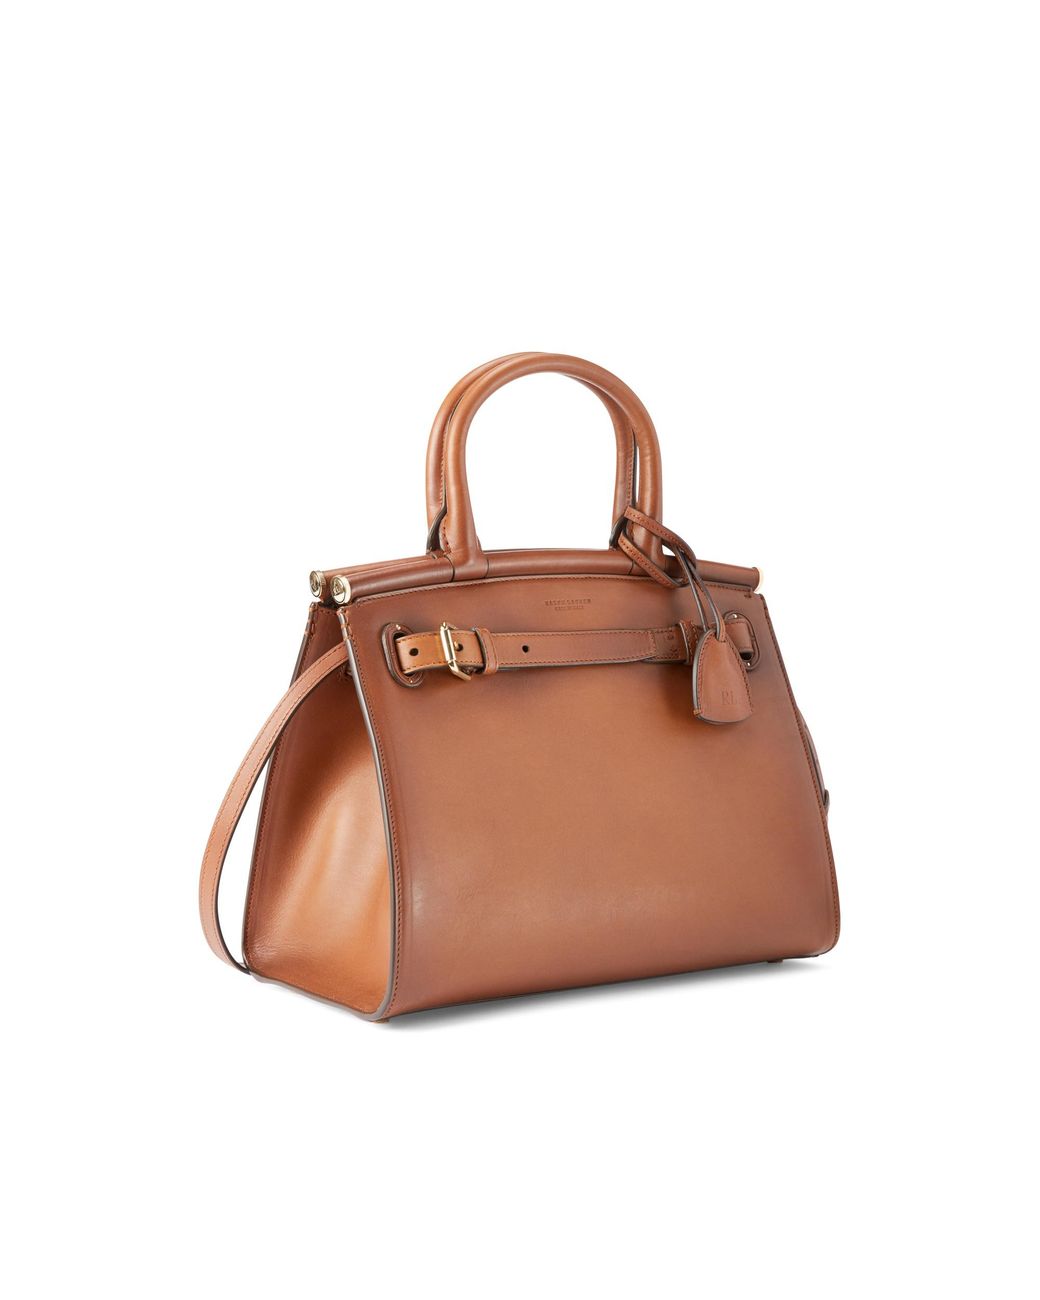 Ralph Lauren Leather Burnished Medium Rl50 Handbag in rl Gold (Brown) - Lyst